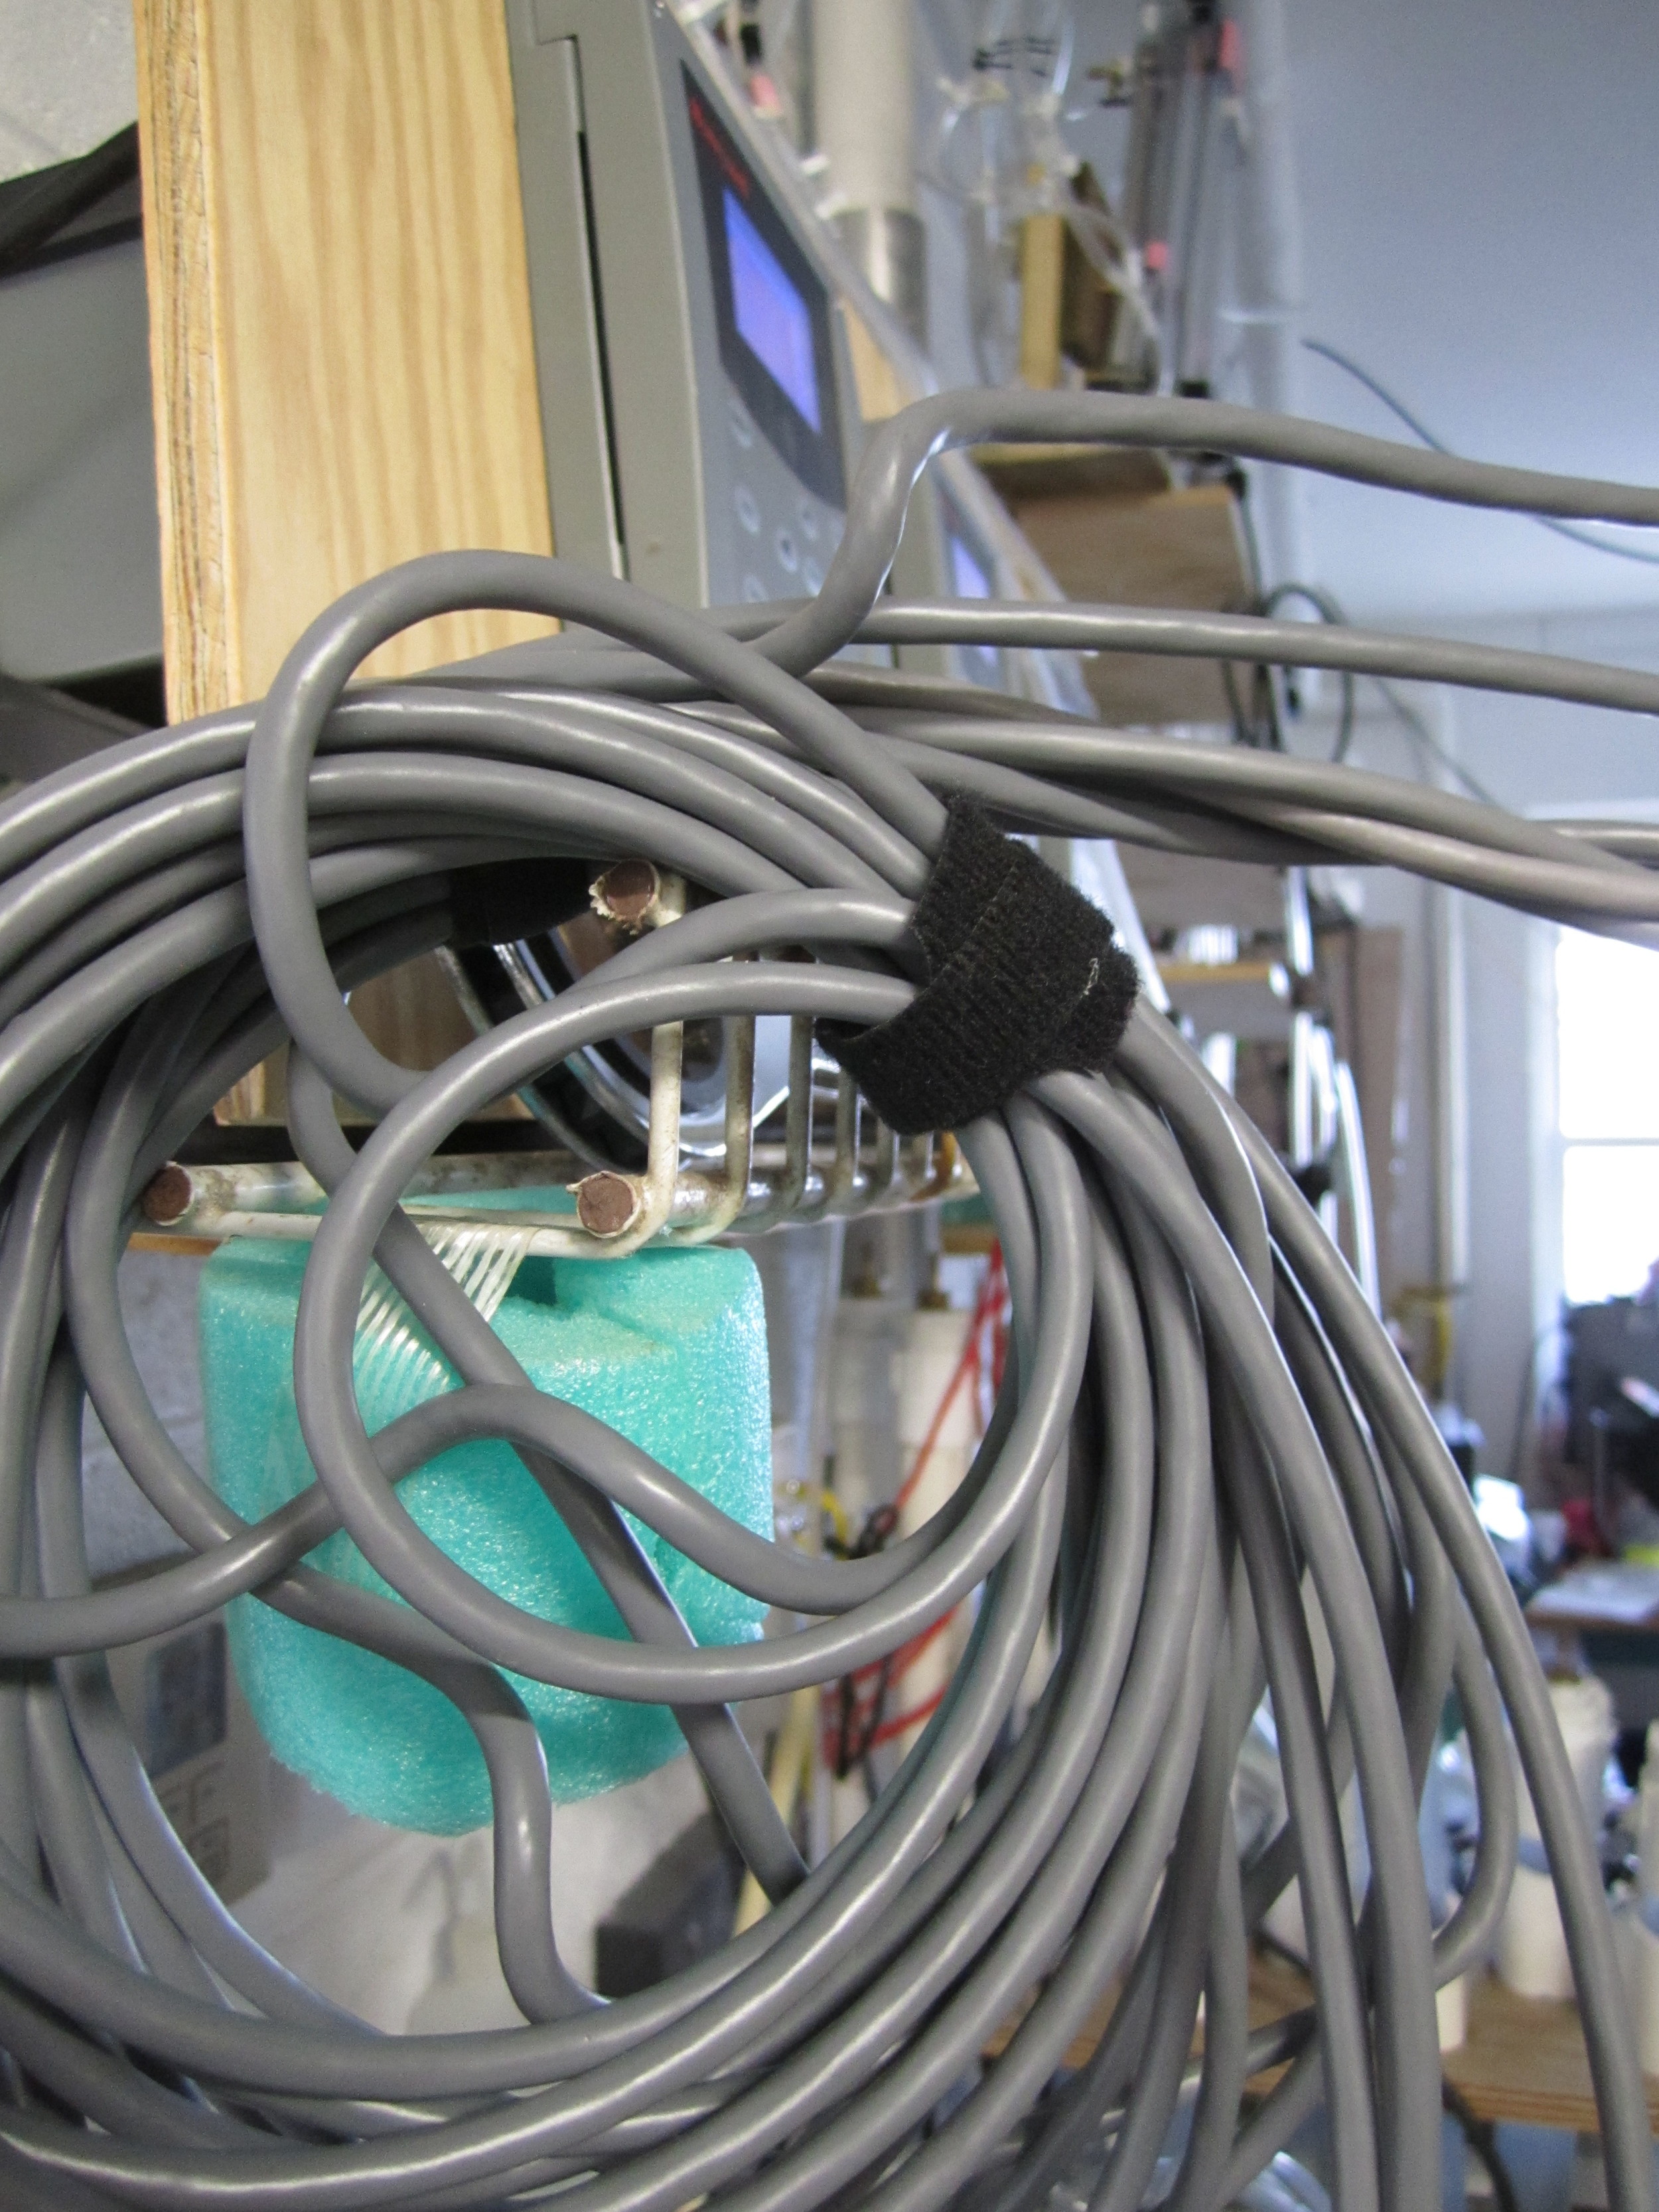 Velcro ties organize water quality probe cords